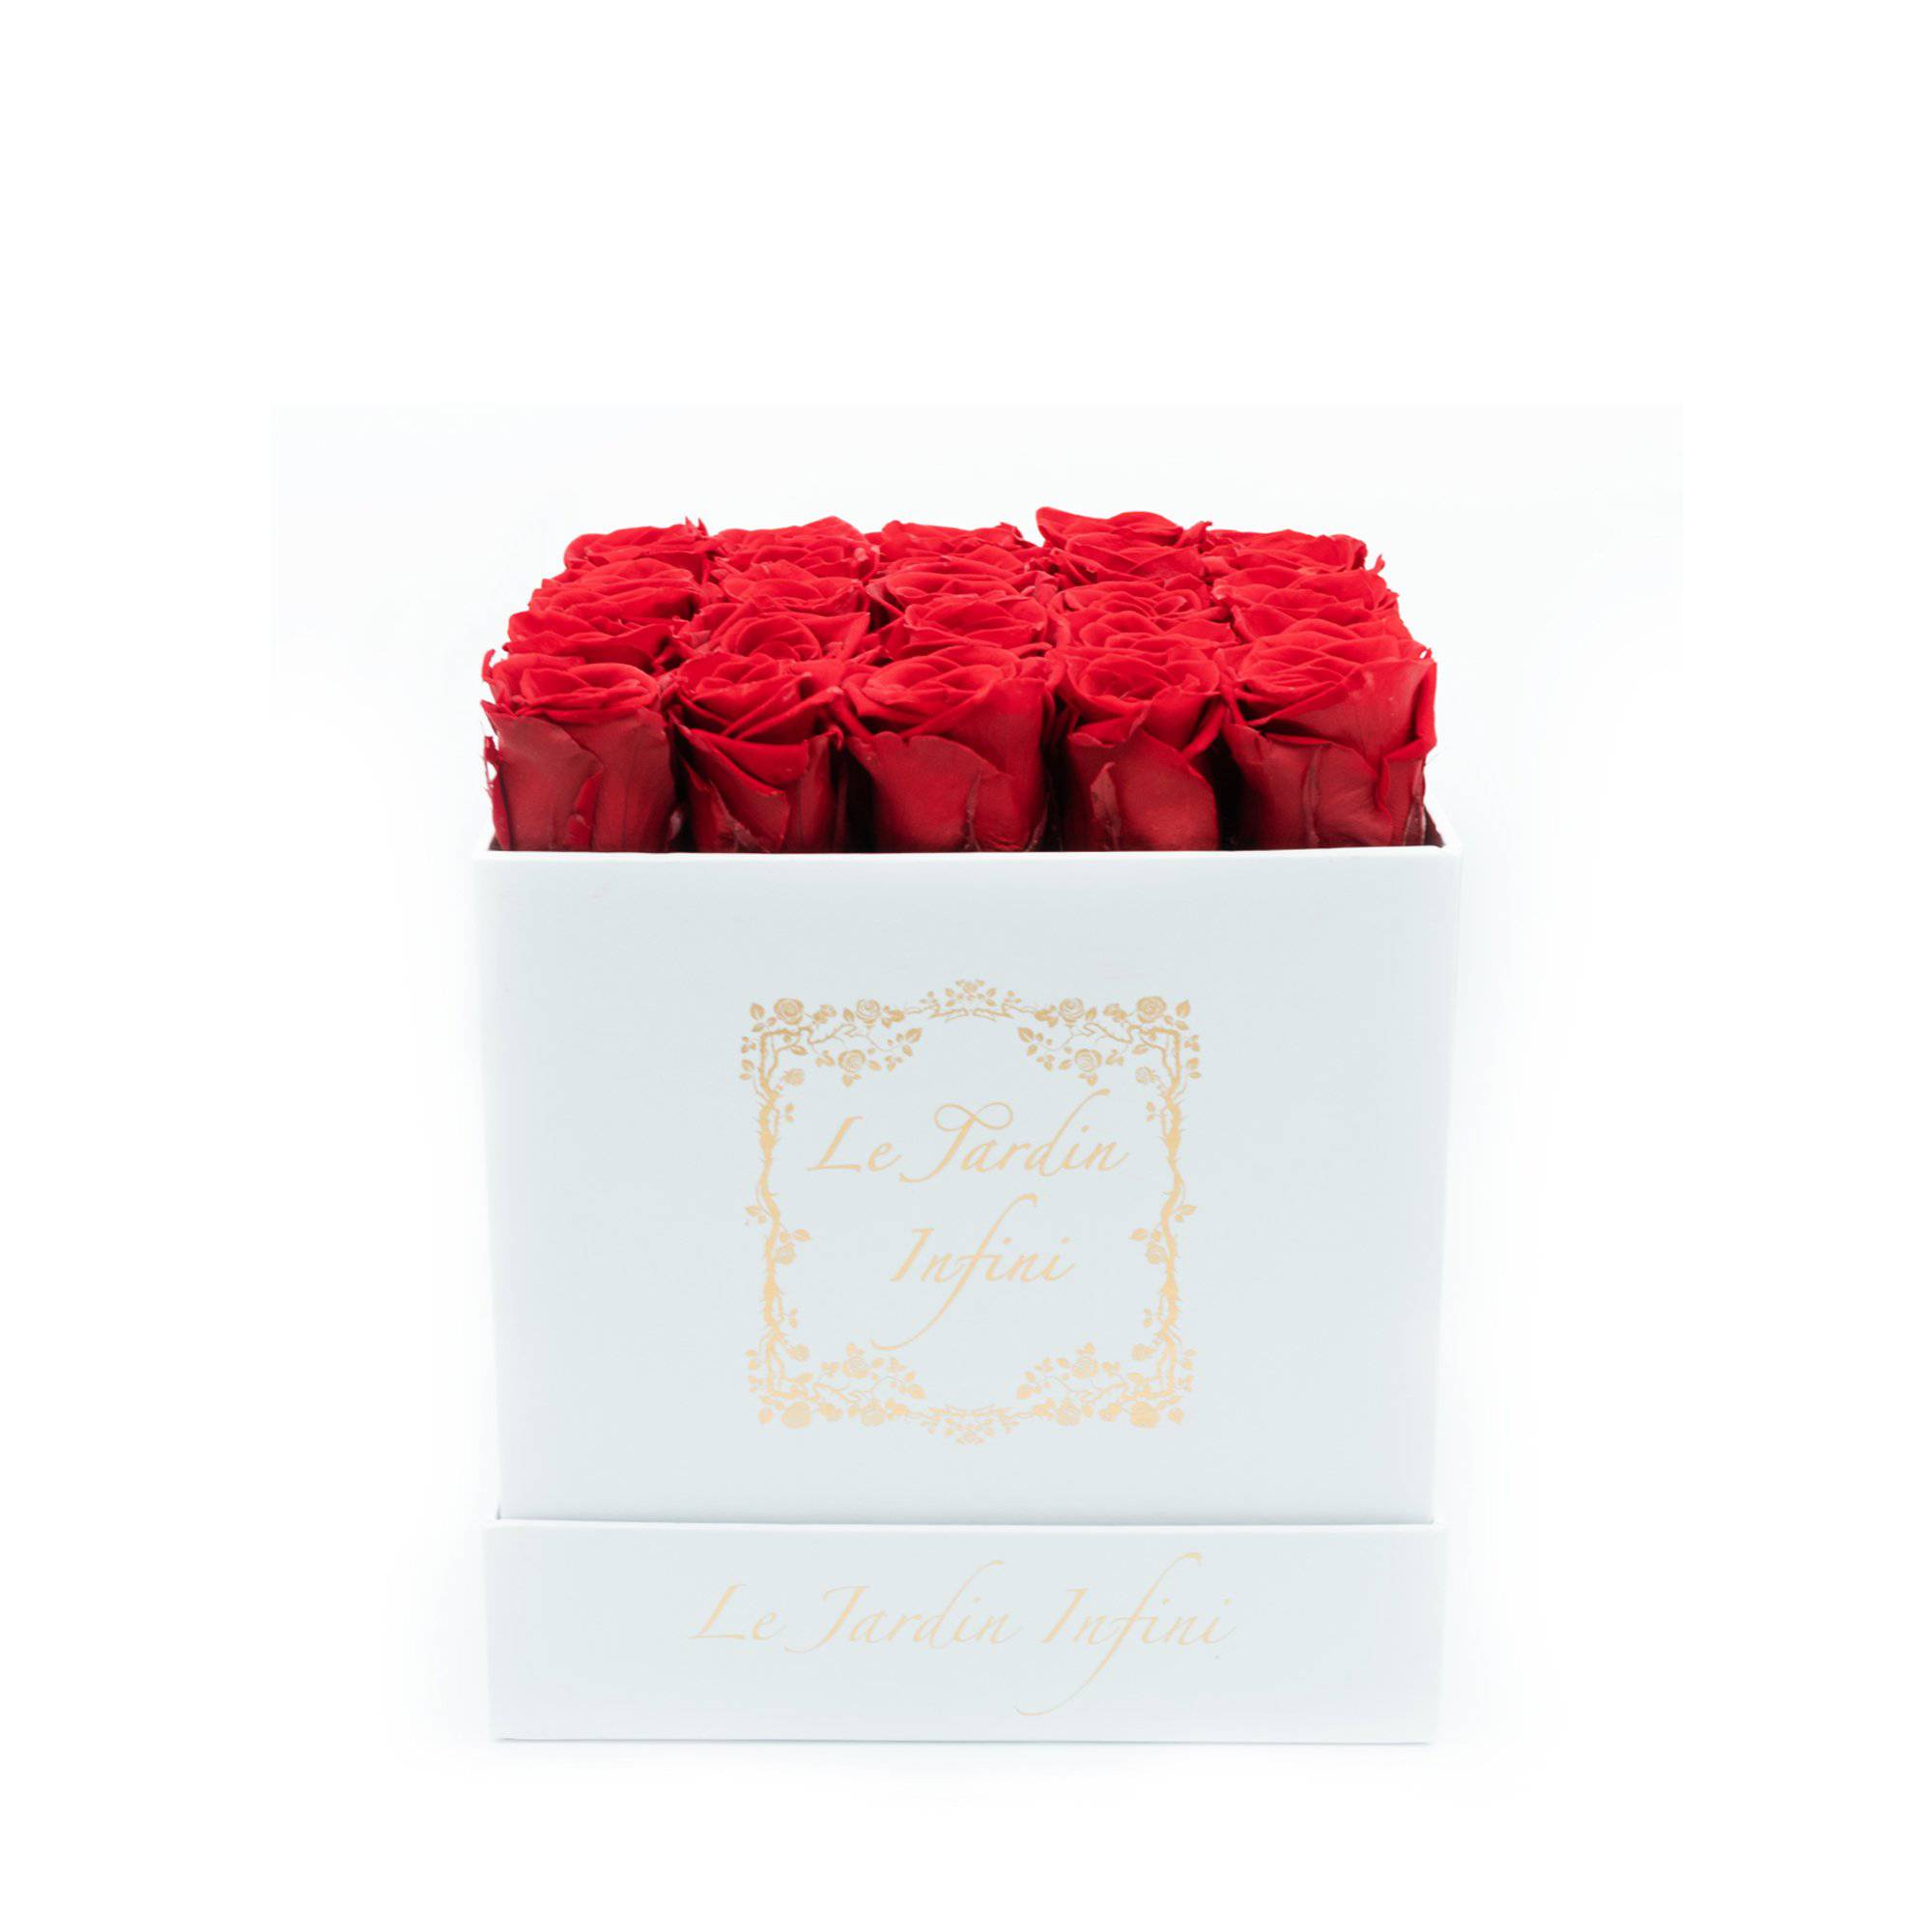 Red Preserved Roses - Medium Square White Box - Le Jardin Infini Roses in a Box